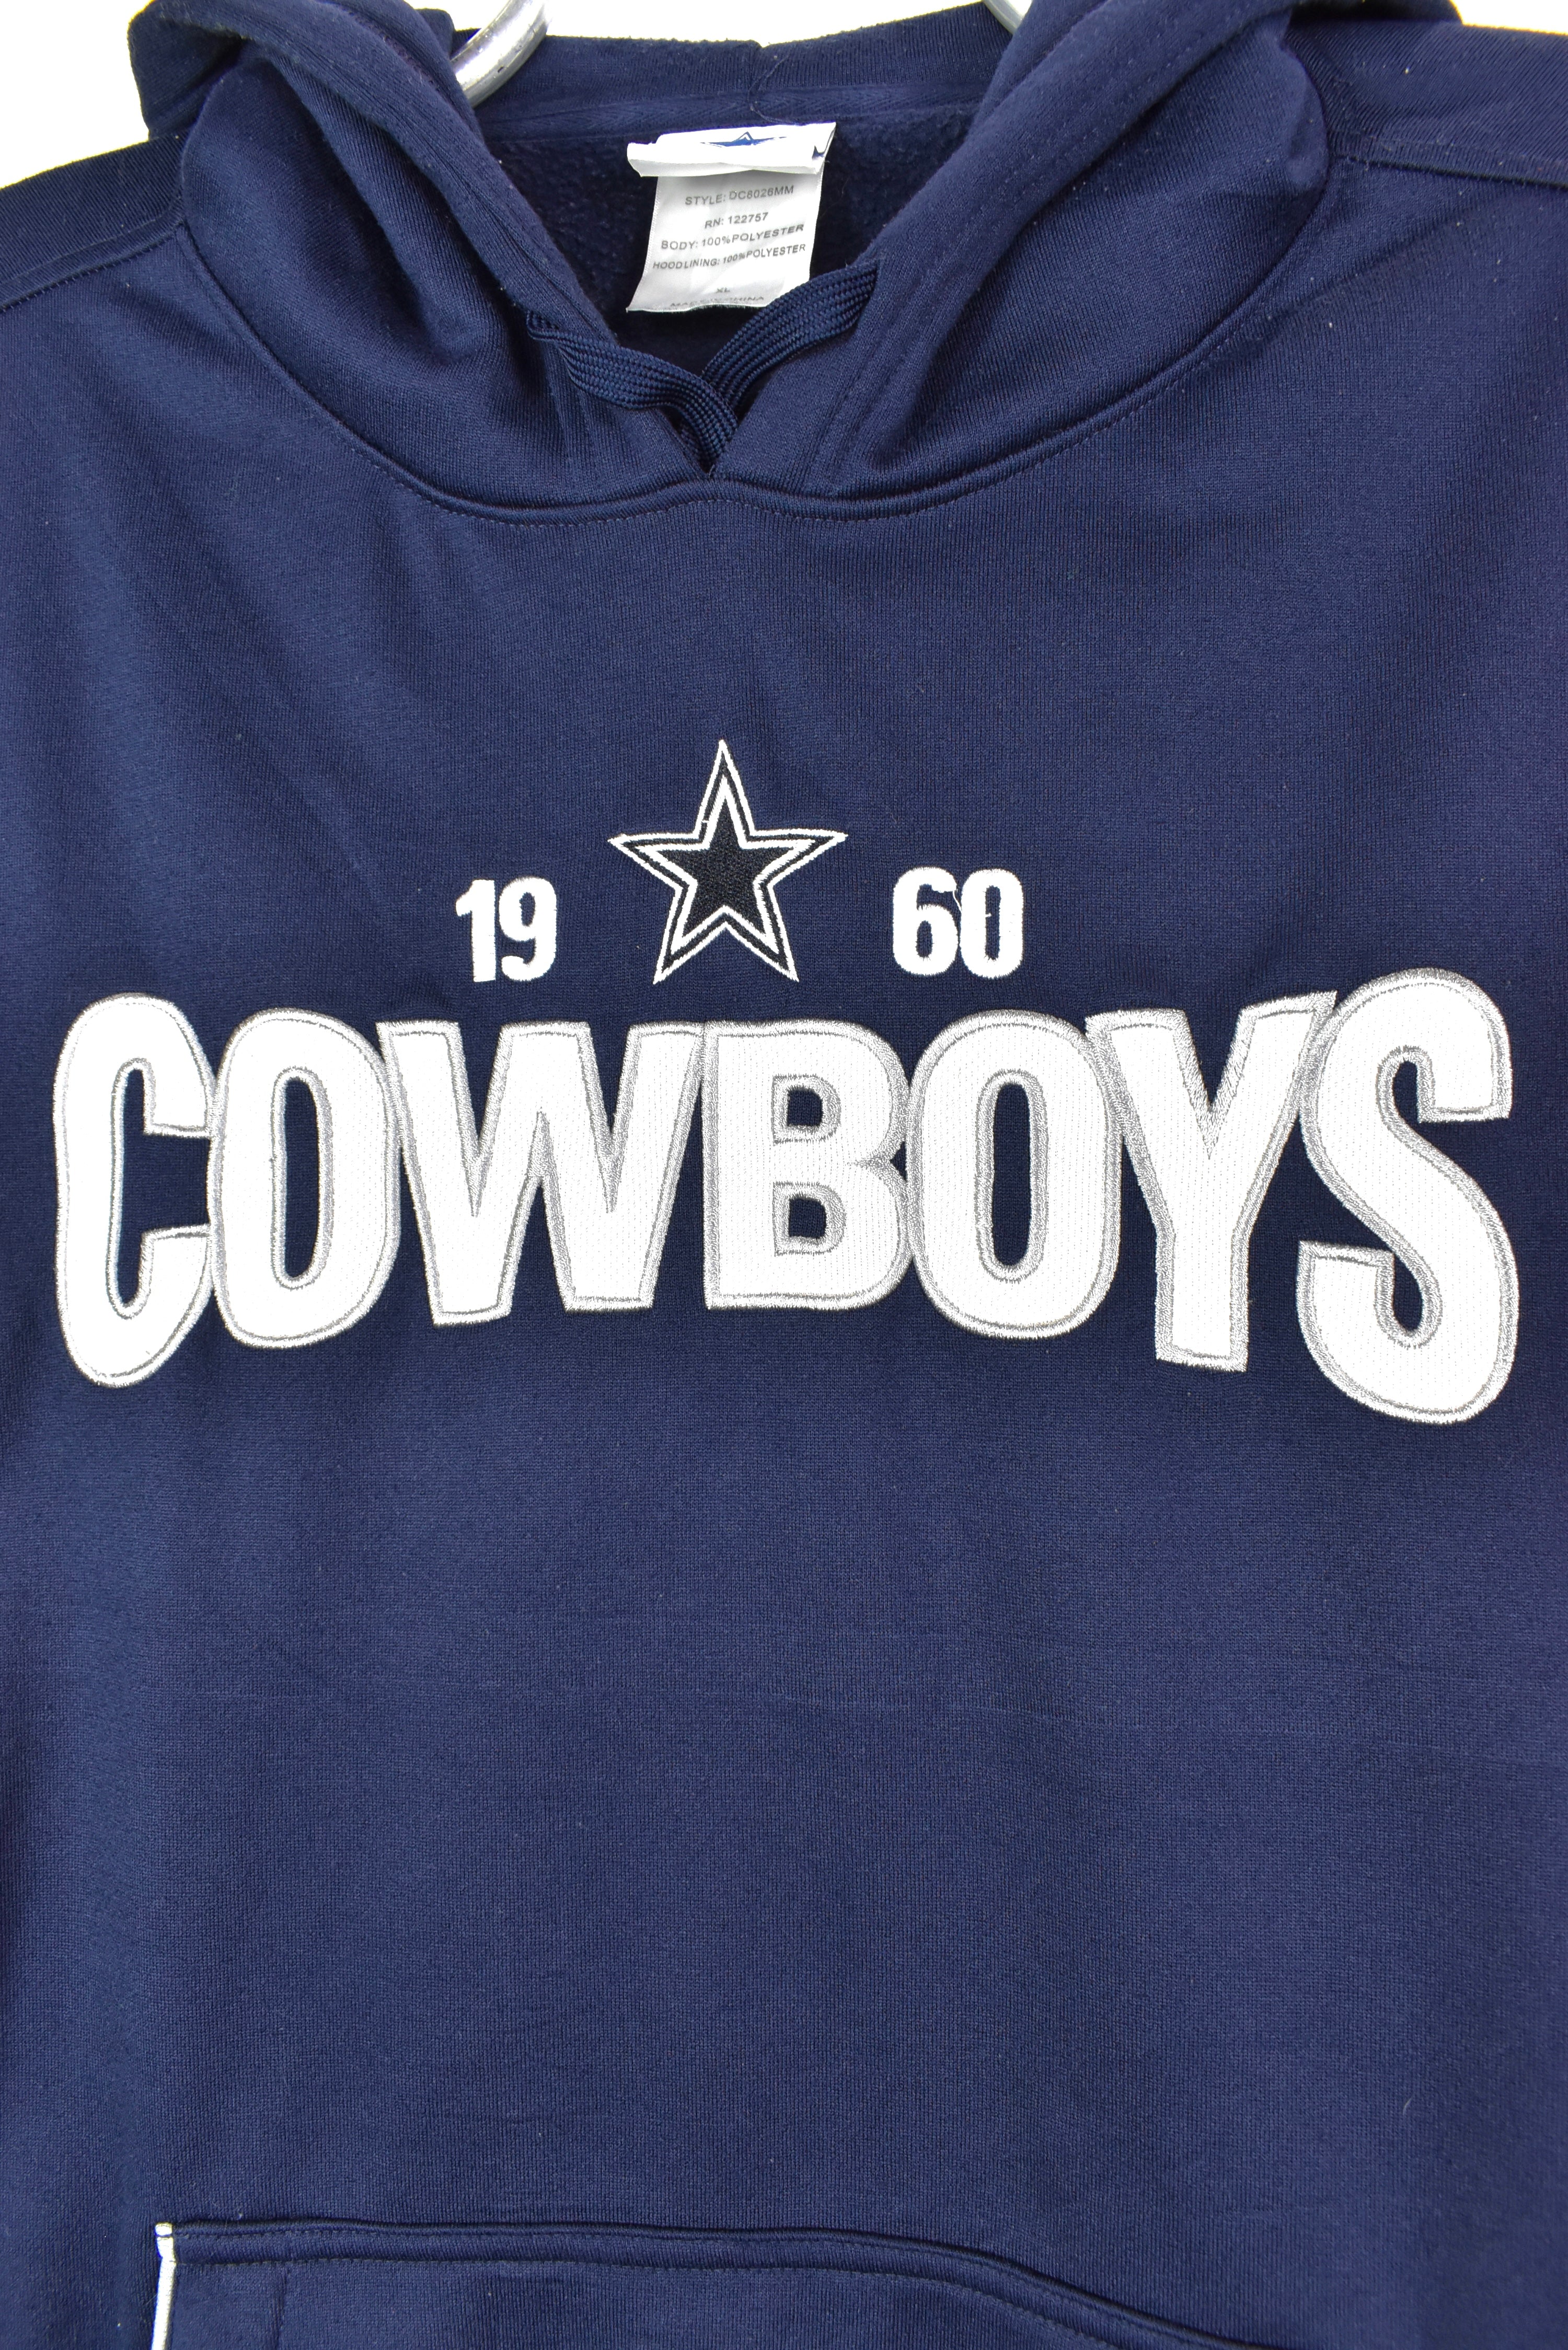 Modern Dallas Cowboys hoodie, NFL navy blue embroidered sweatshirt